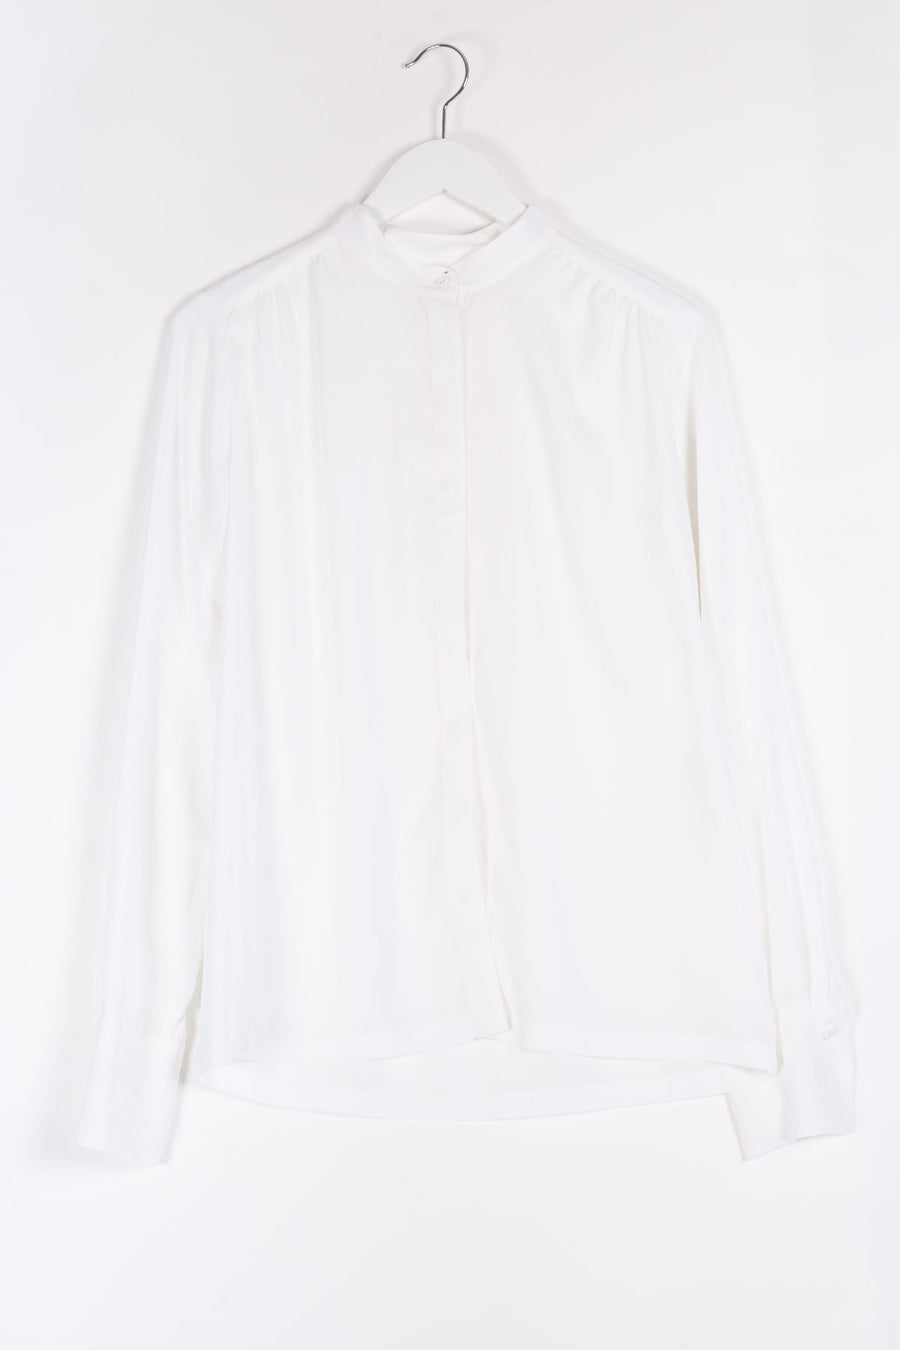 GAMMY Light Polyester Blouse - White